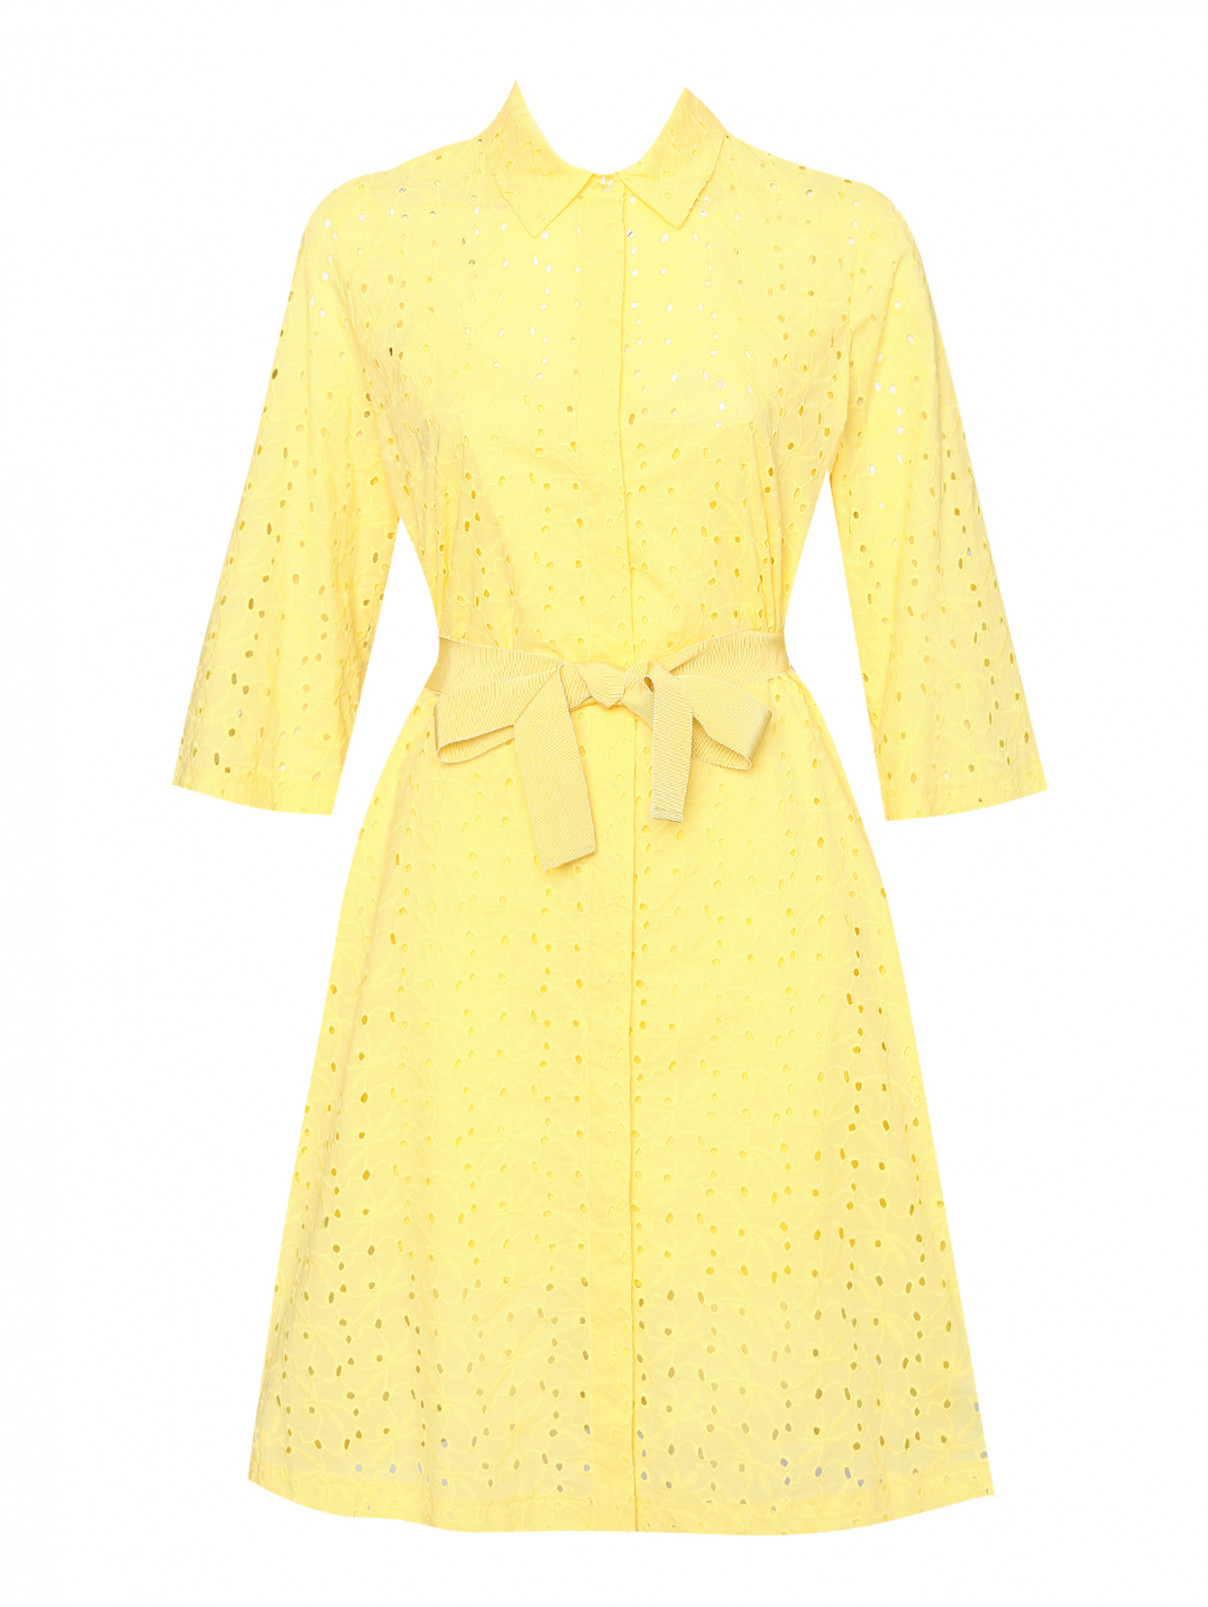 Платье-рубашка из хлопка с поясом Persona by Marina Rinaldi  –  Общий вид  – Цвет:  Желтый